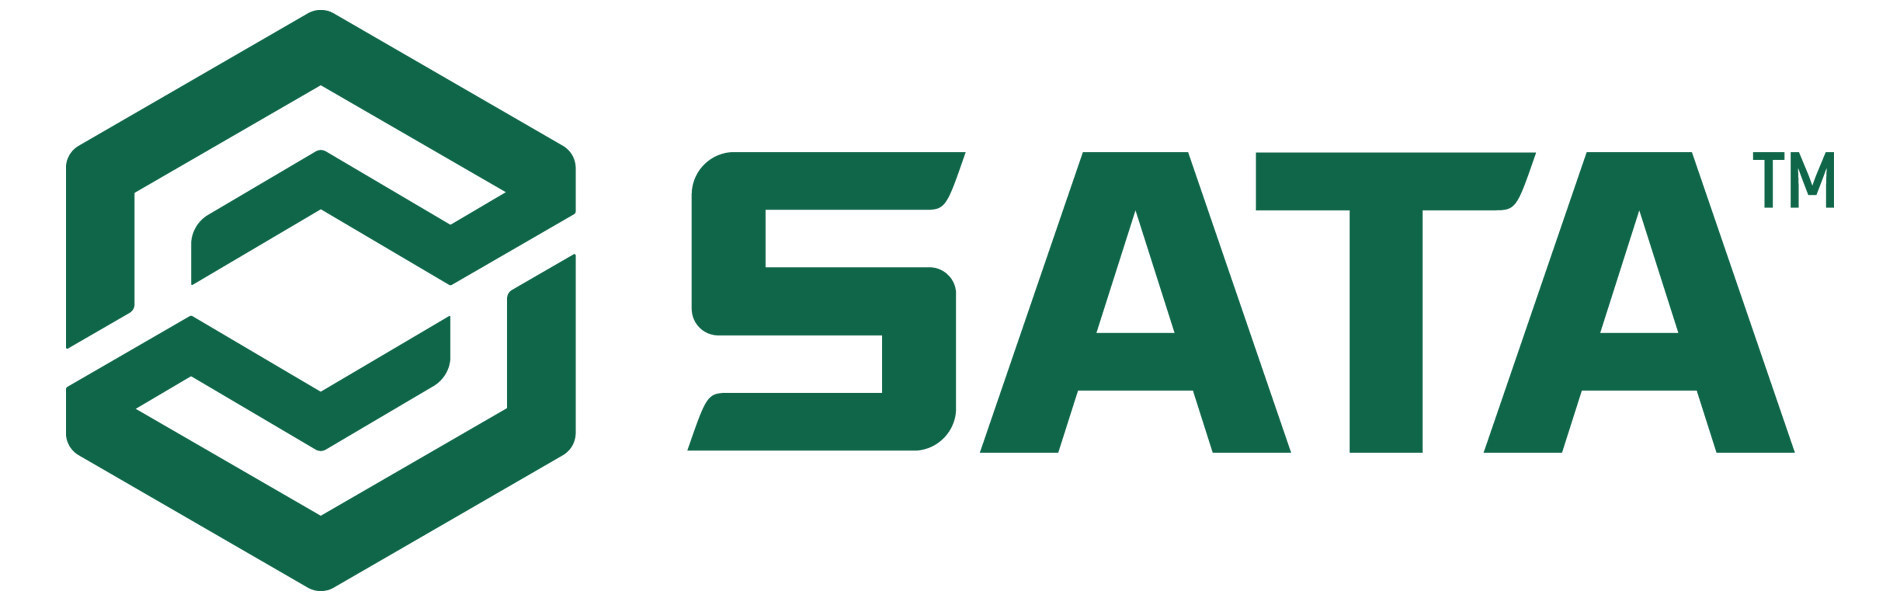 SATA_Tools_Logo.jpg?p=publish